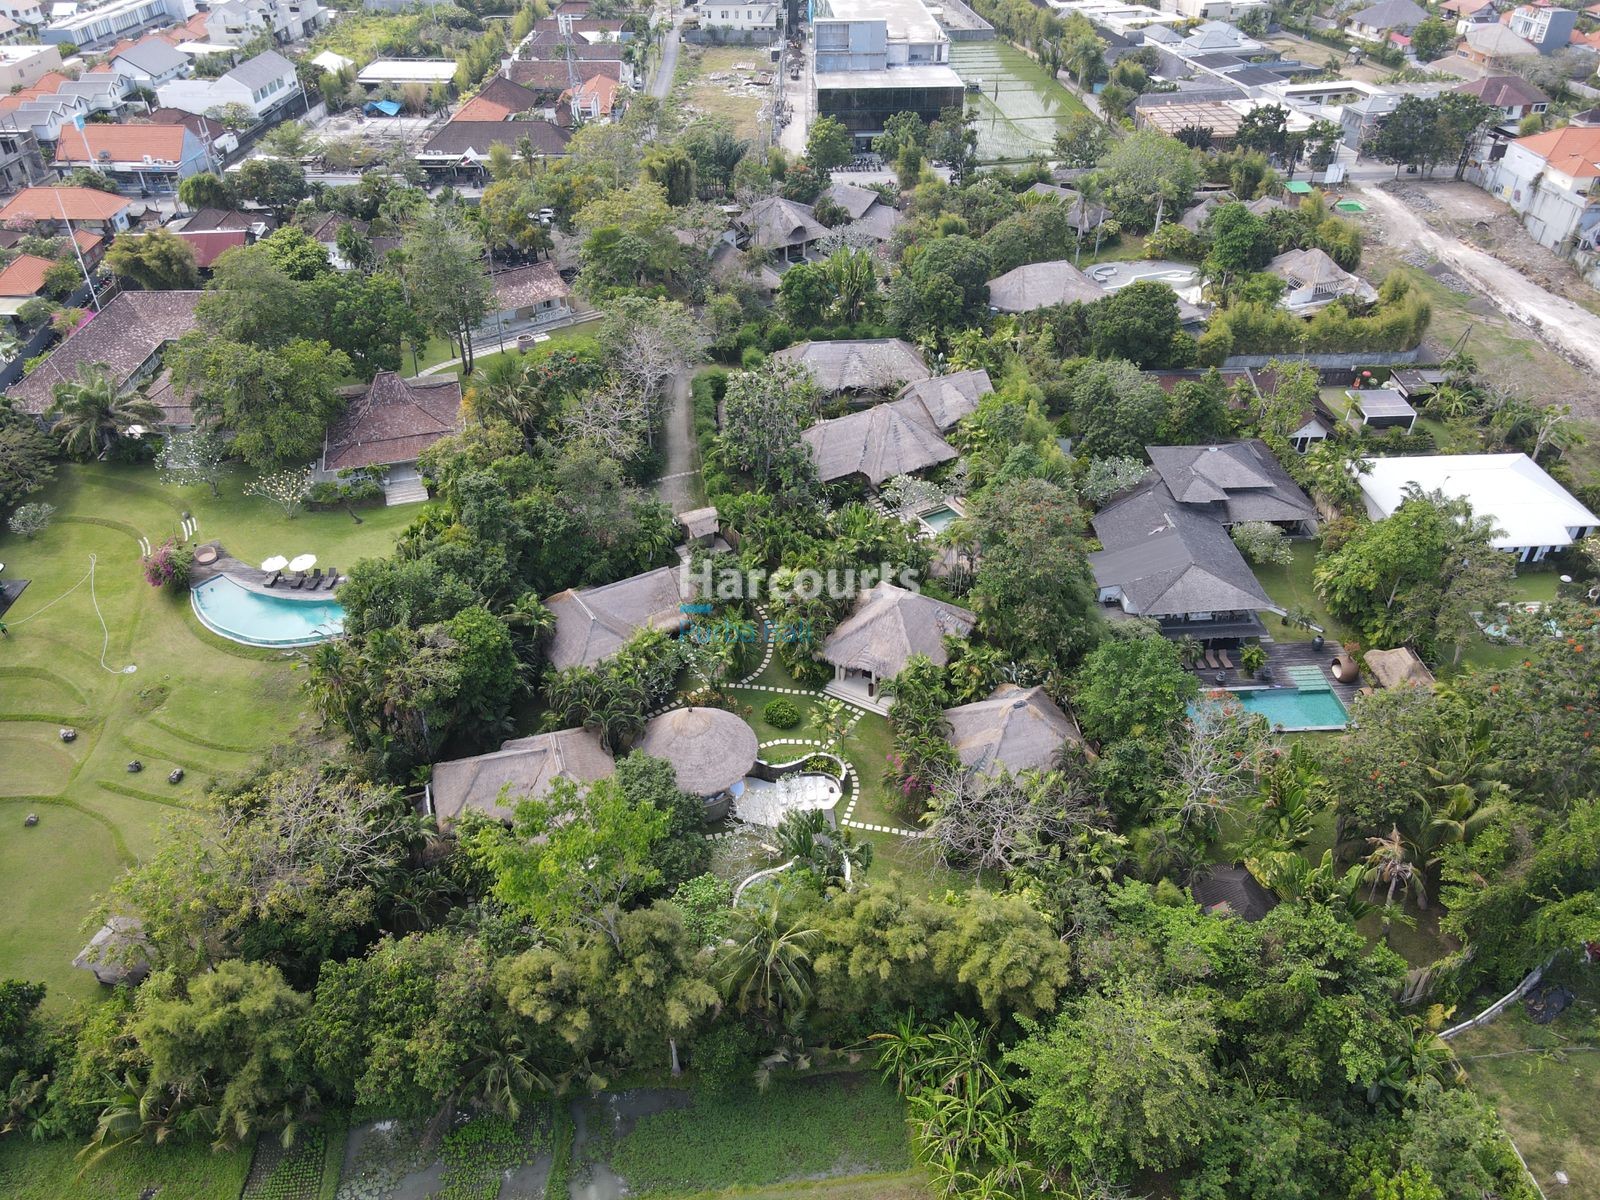 Umalas Bali Land, Bumbak Leasehold property